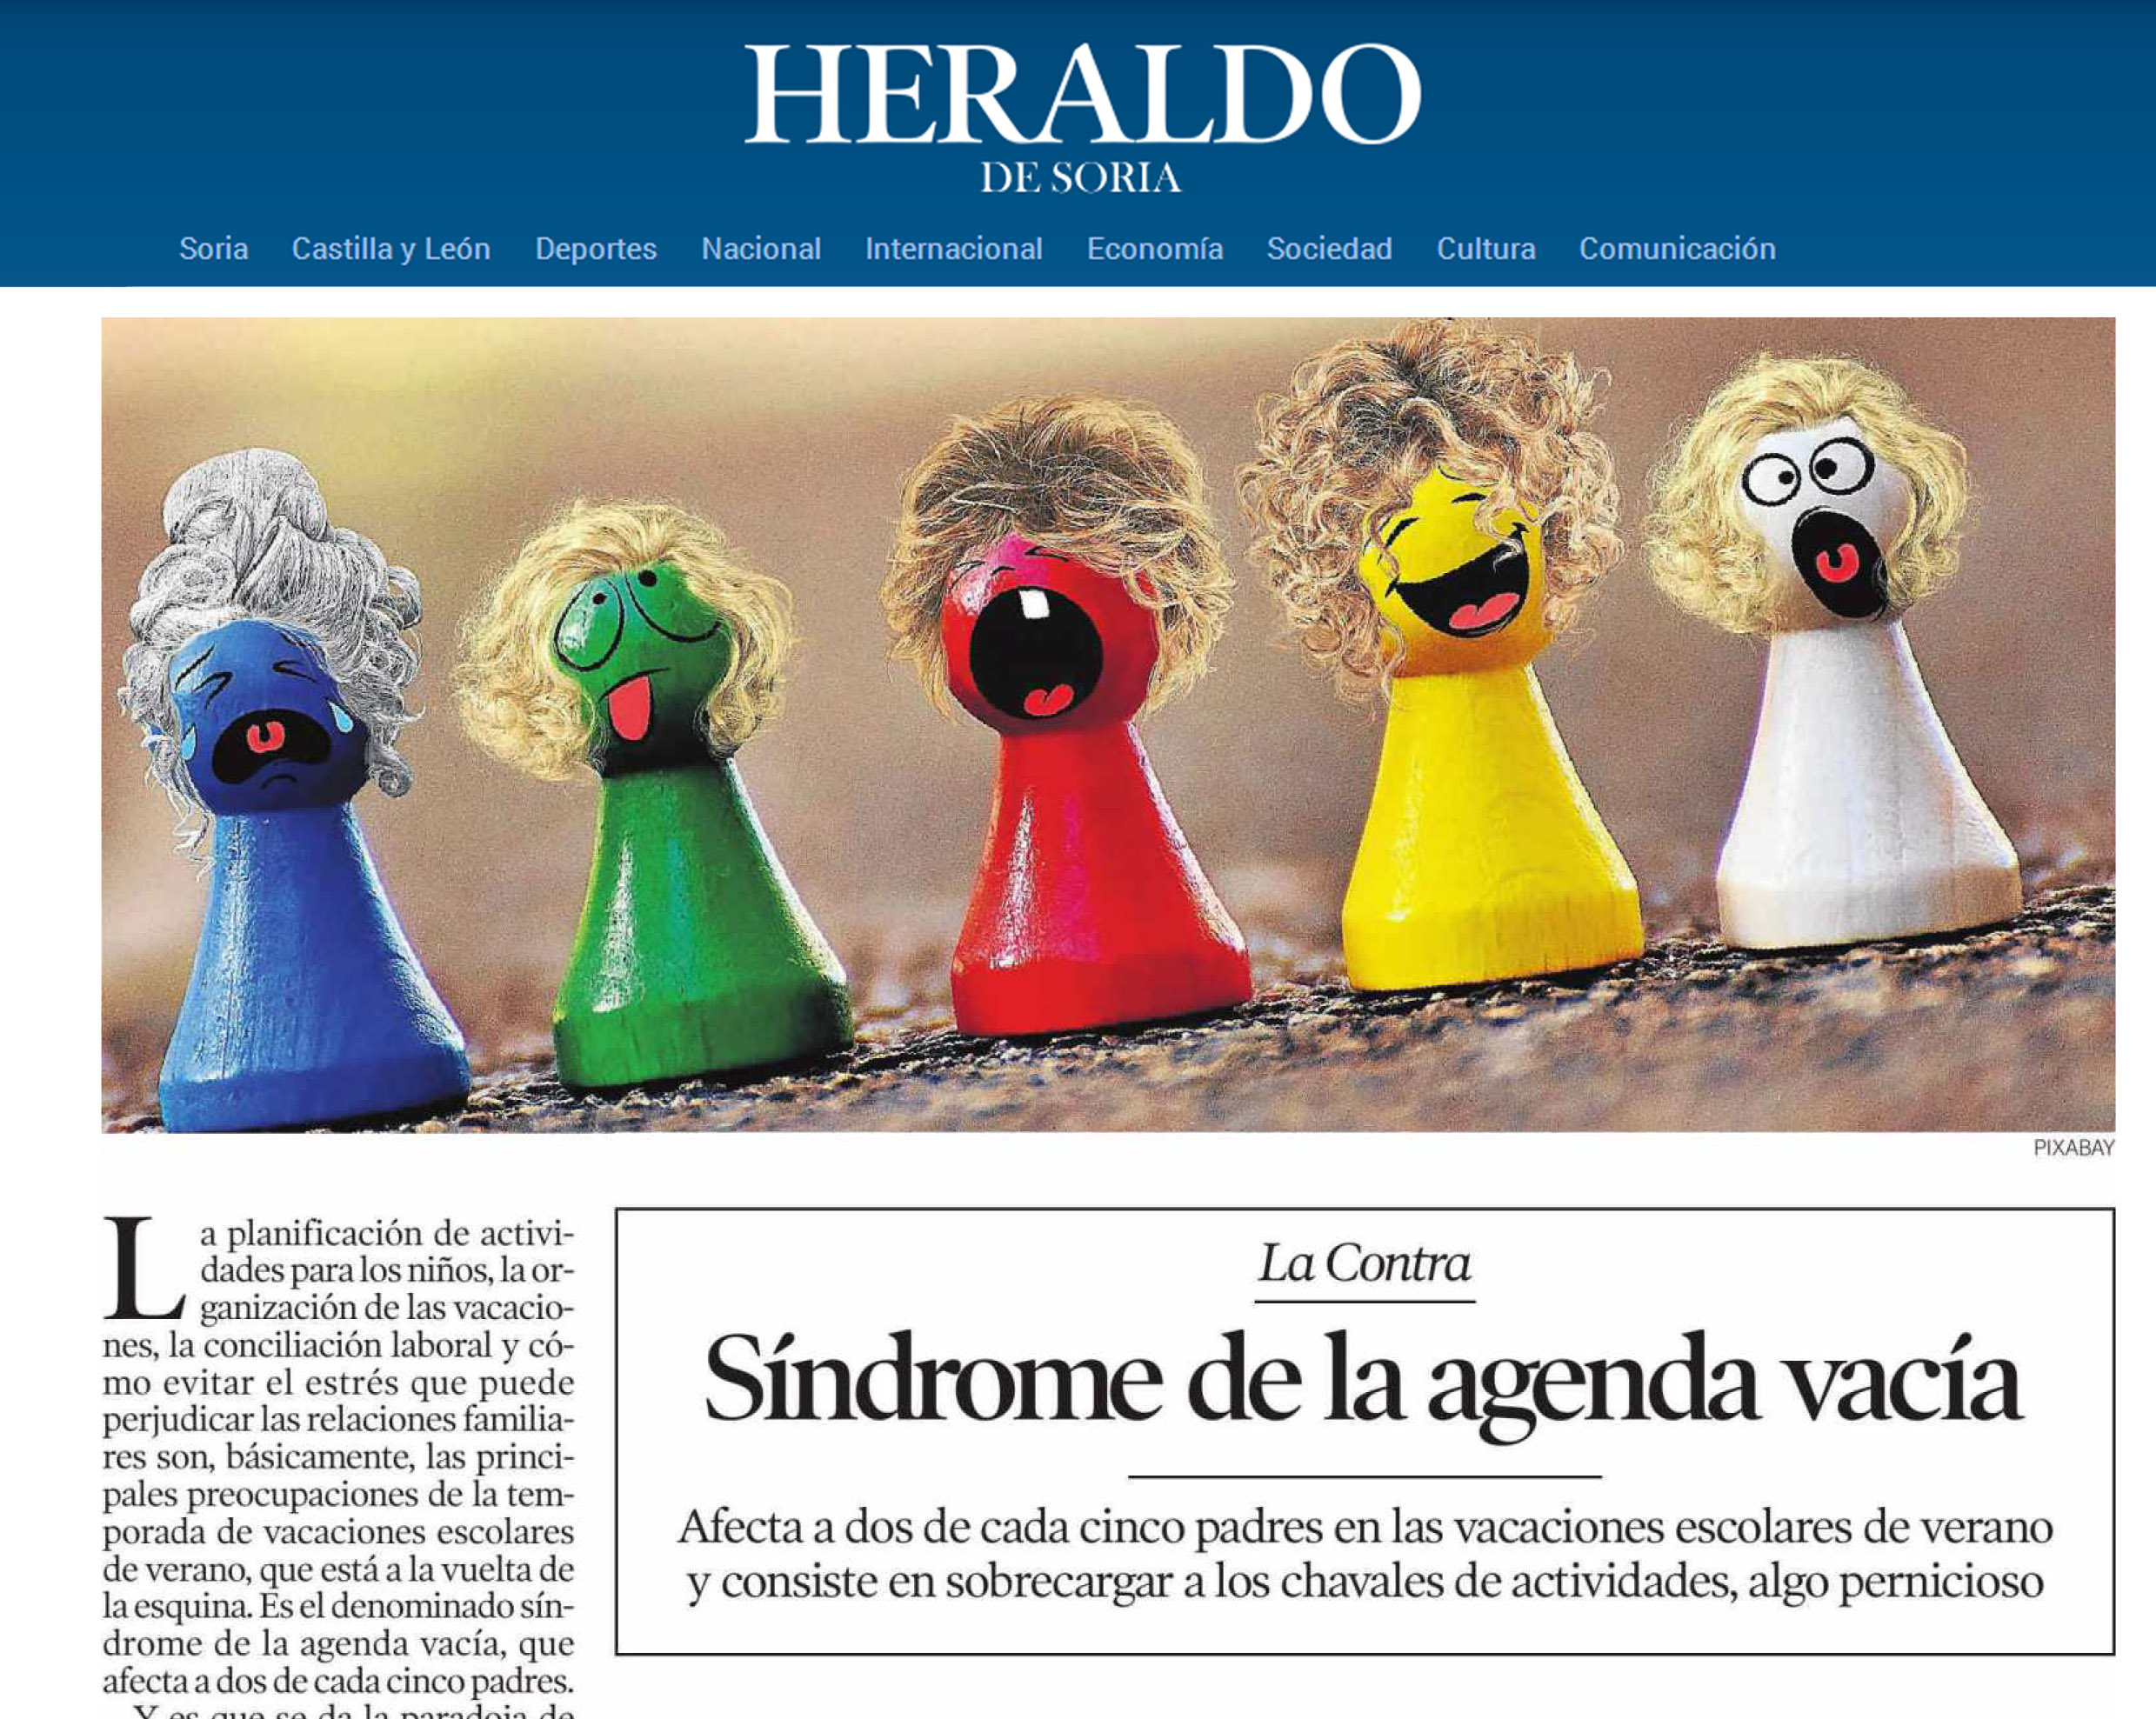 Heraldo de Soria: Síndrome de la agenda vacia